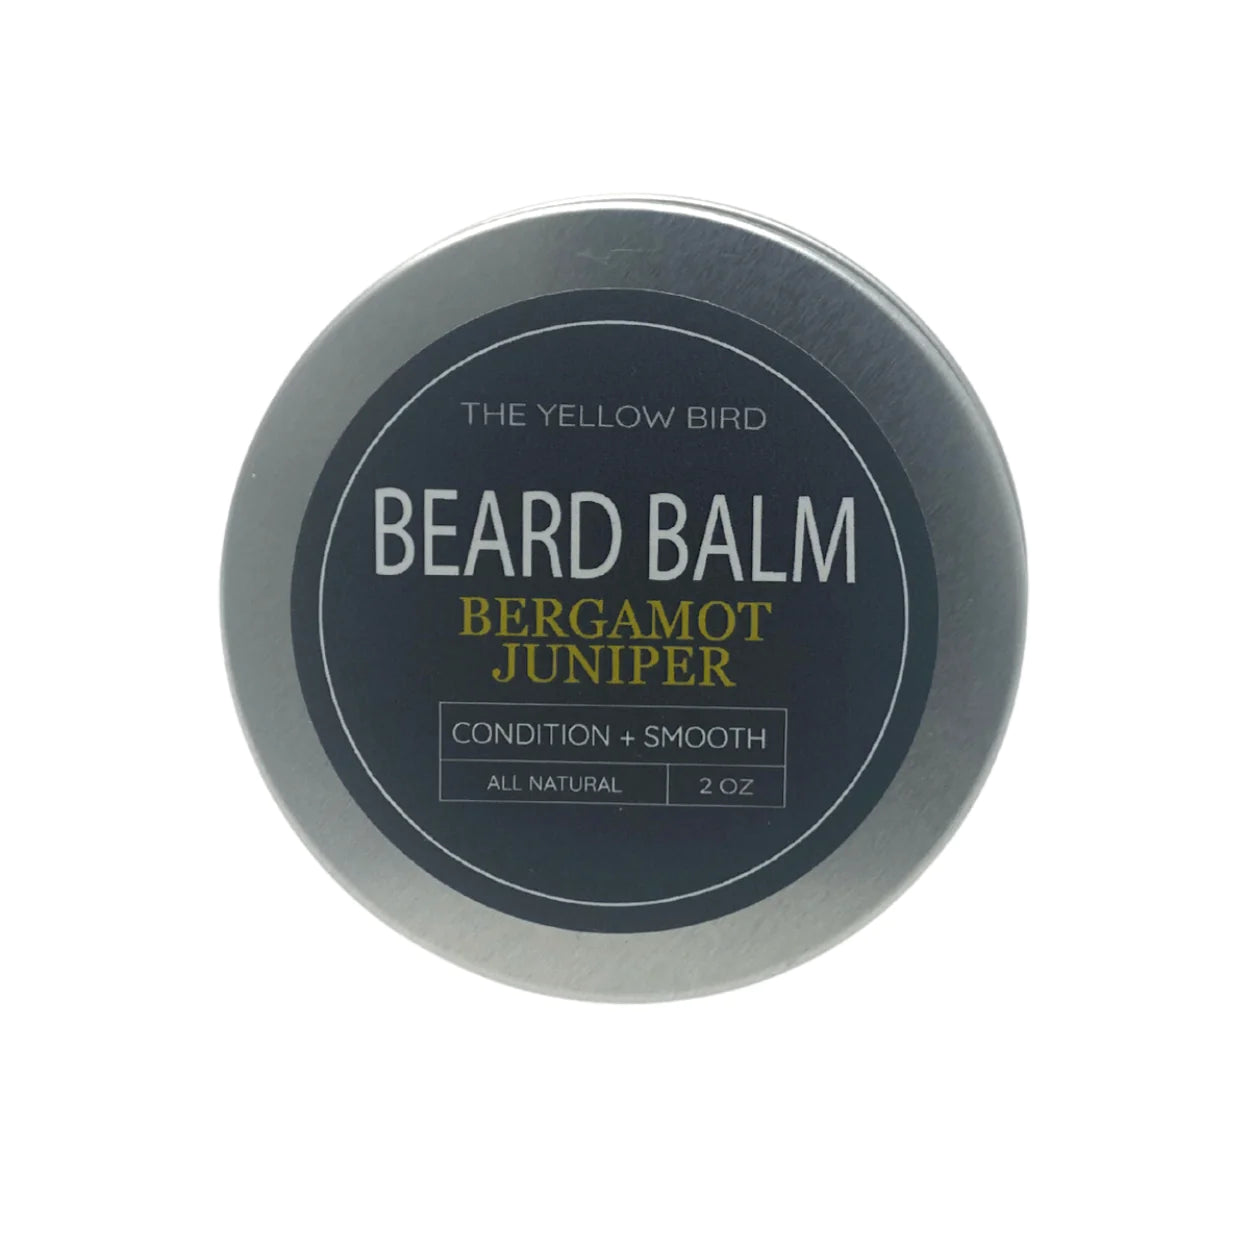 Bergamot Juniper Beard Balm